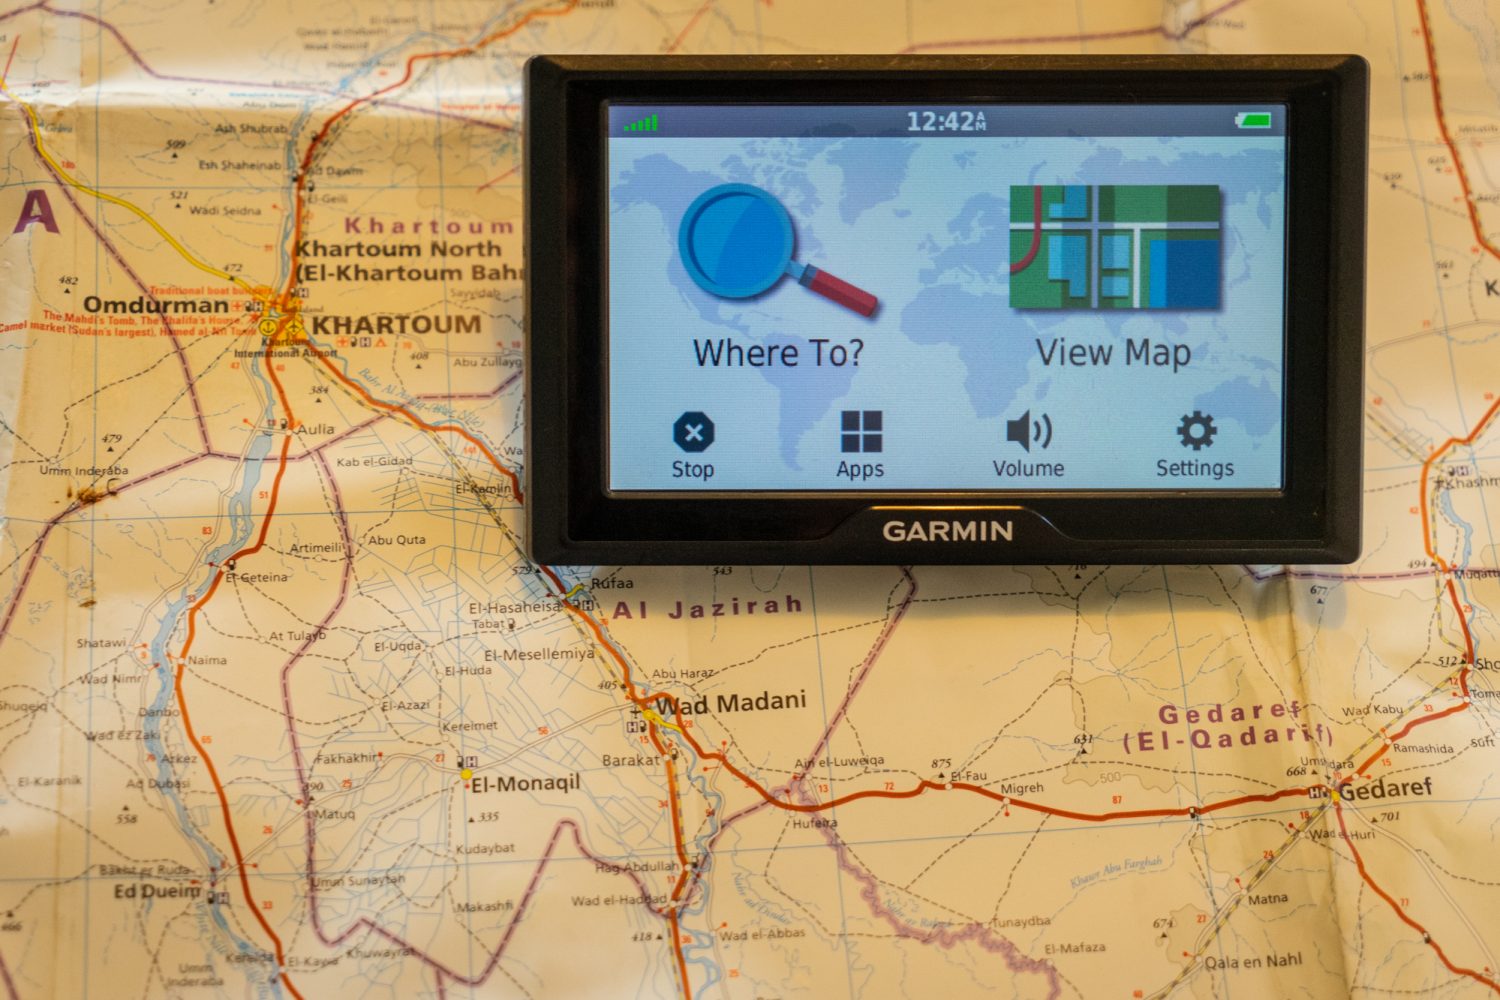 Garmin GPS Wordpress 1 Of 1 1500x1000 